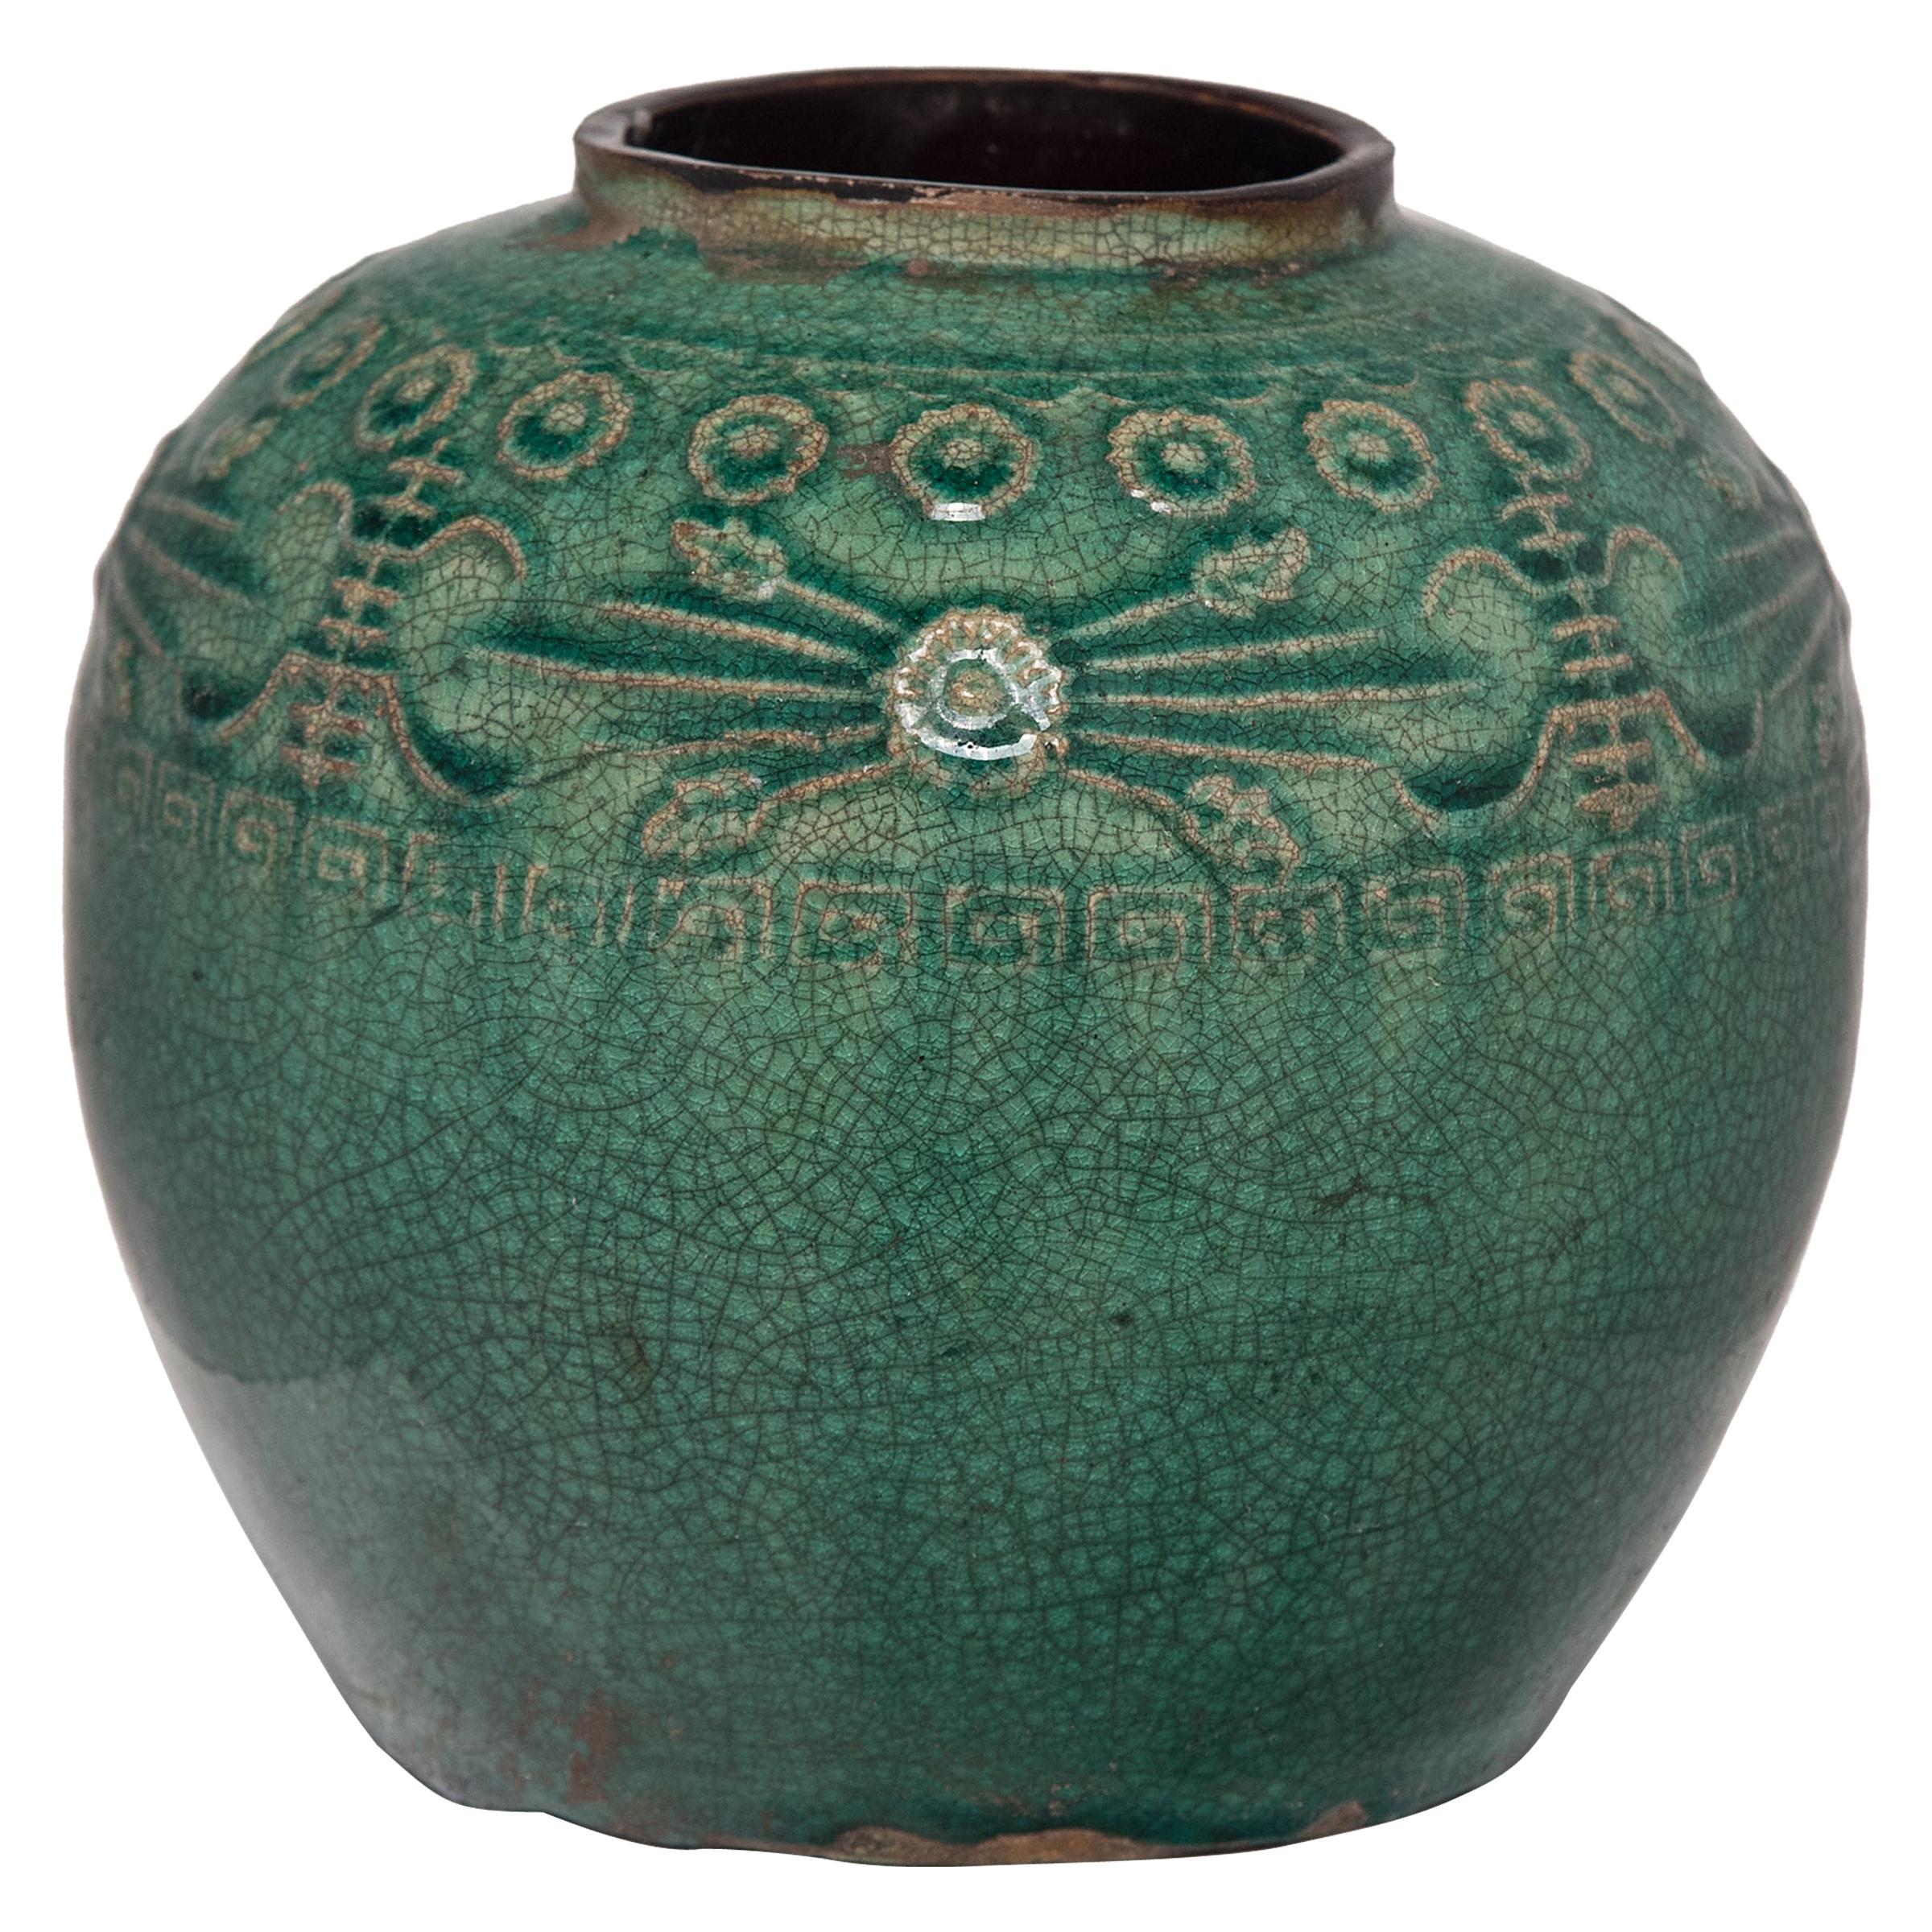 Chinese Green Glazed Salt Jar, c. 1900